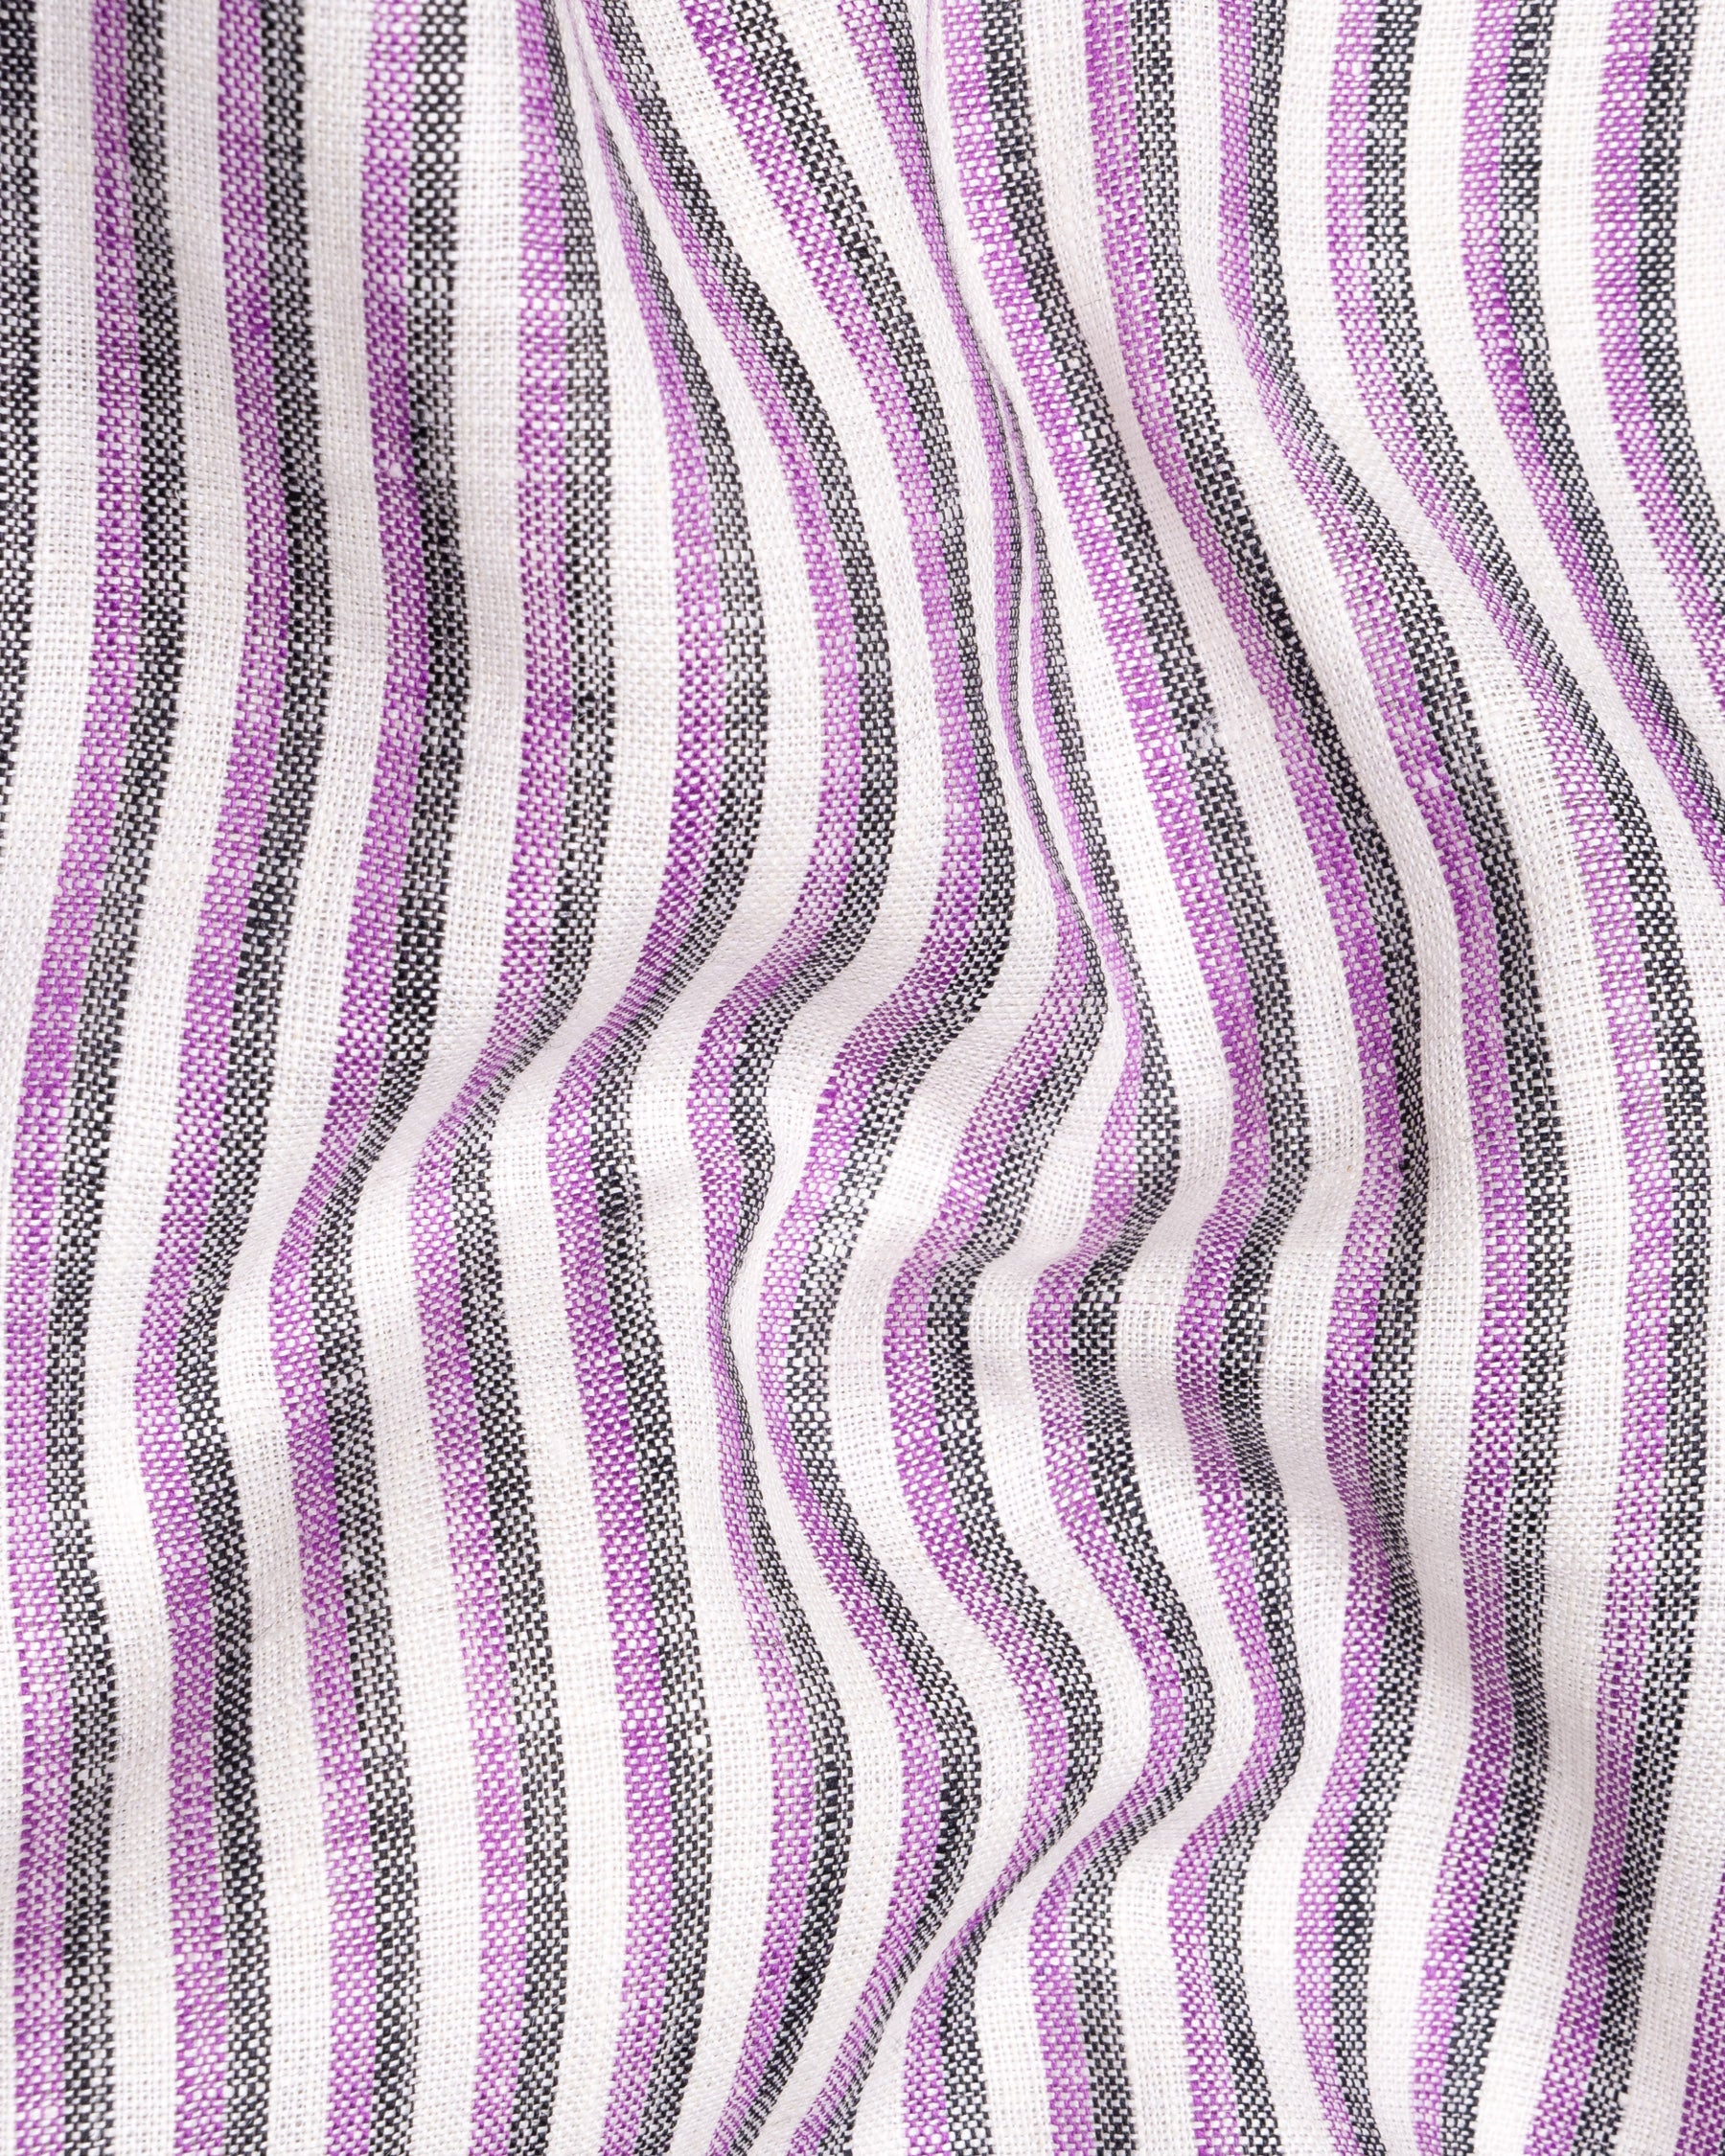 Jade Black with Purple and white Striped Luxurious Linen Shirt 5824-BD-BLK-38, 5824-BD-BLK-H-38, 5824-BD-BLK-39, 5824-BD-BLK-H-39, 5824-BD-BLK-40, 5824-BD-BLK-H-40, 5824-BD-BLK-42, 5824-BD-BLK-H-42, 5824-BD-BLK-44, 5824-BD-BLK-H-44, 5824-BD-BLK-46, 5824-BD-BLK-H-46, 5824-BD-BLK-48, 5824-BD-BLK-H-48, 5824-BD-BLK-50, 5824-BD-BLK-H-50, 5824-BD-BLK-52, 5824-BD-BLK-H-52